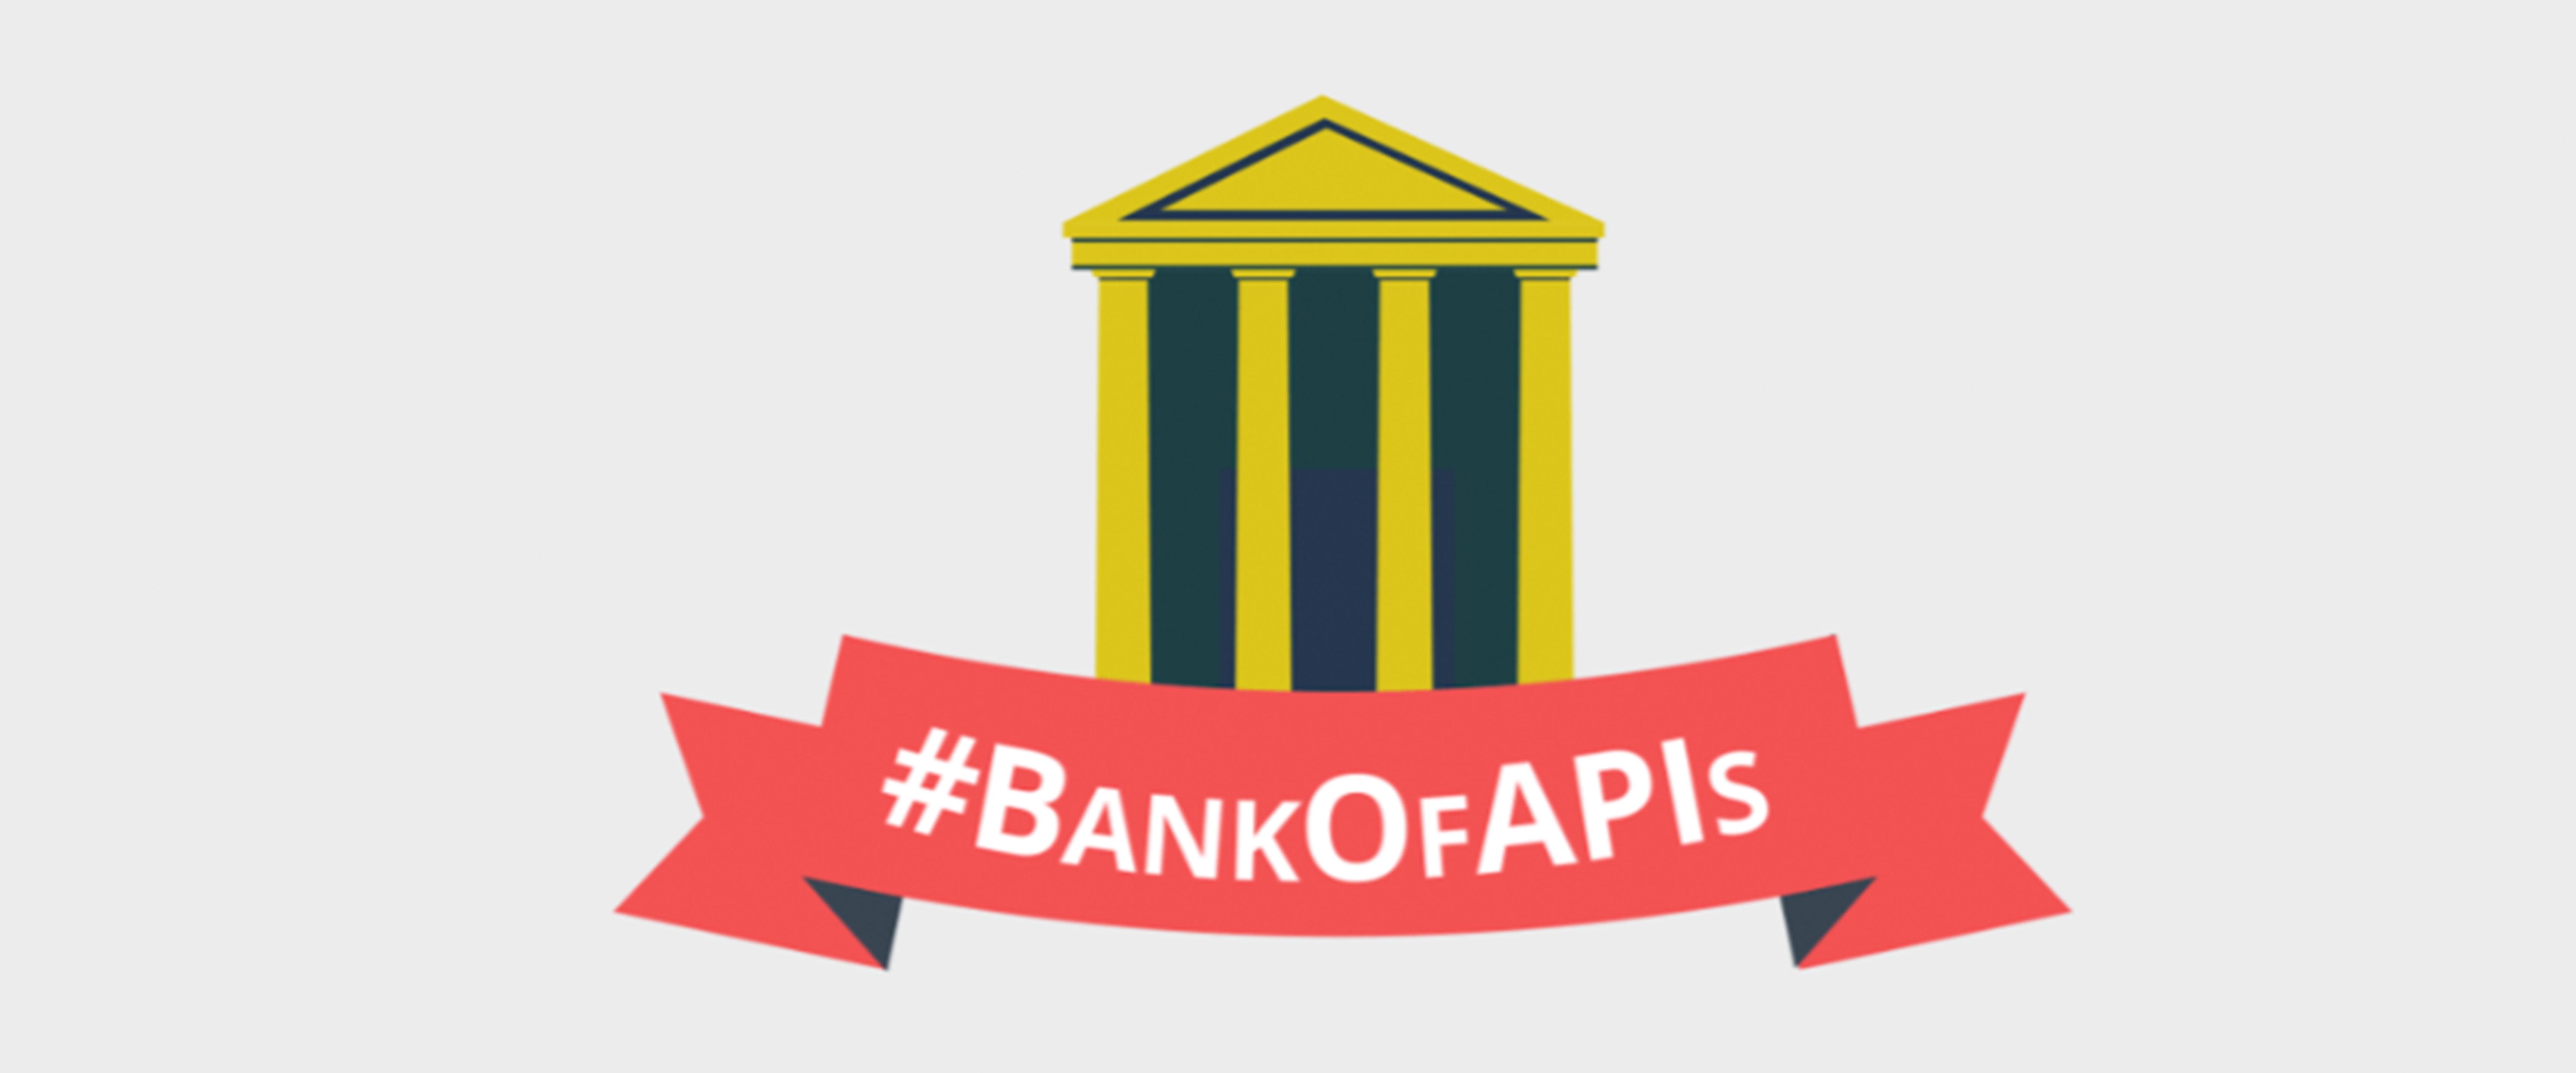 RBS - Bank of Apis - Explainer Video